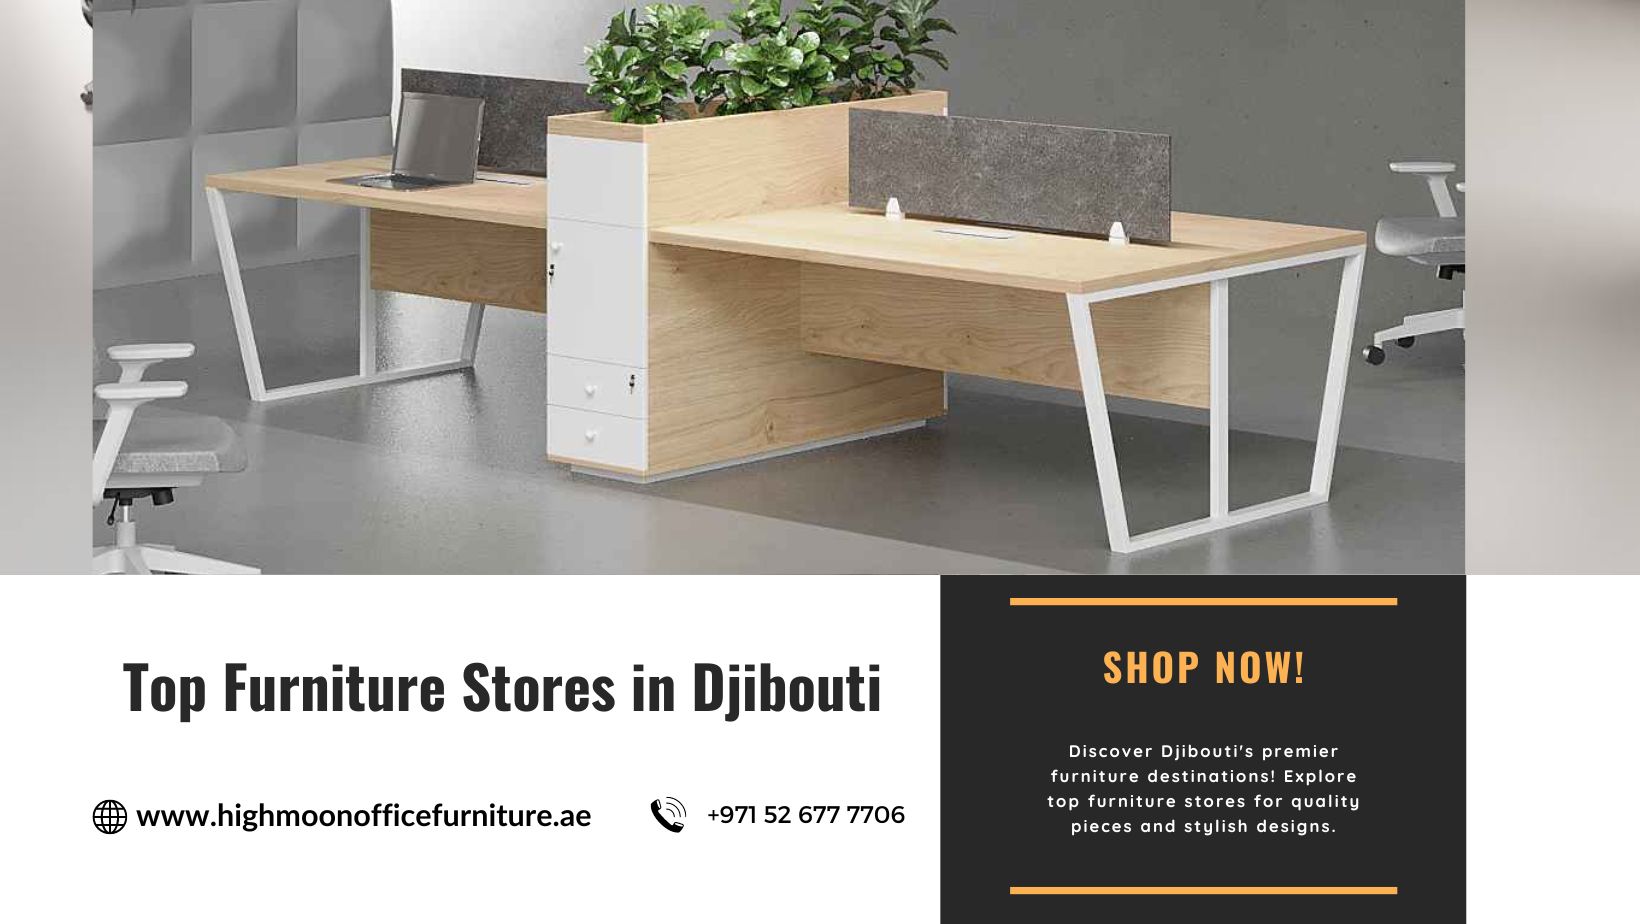 Top Furniture Stores in Djibouti